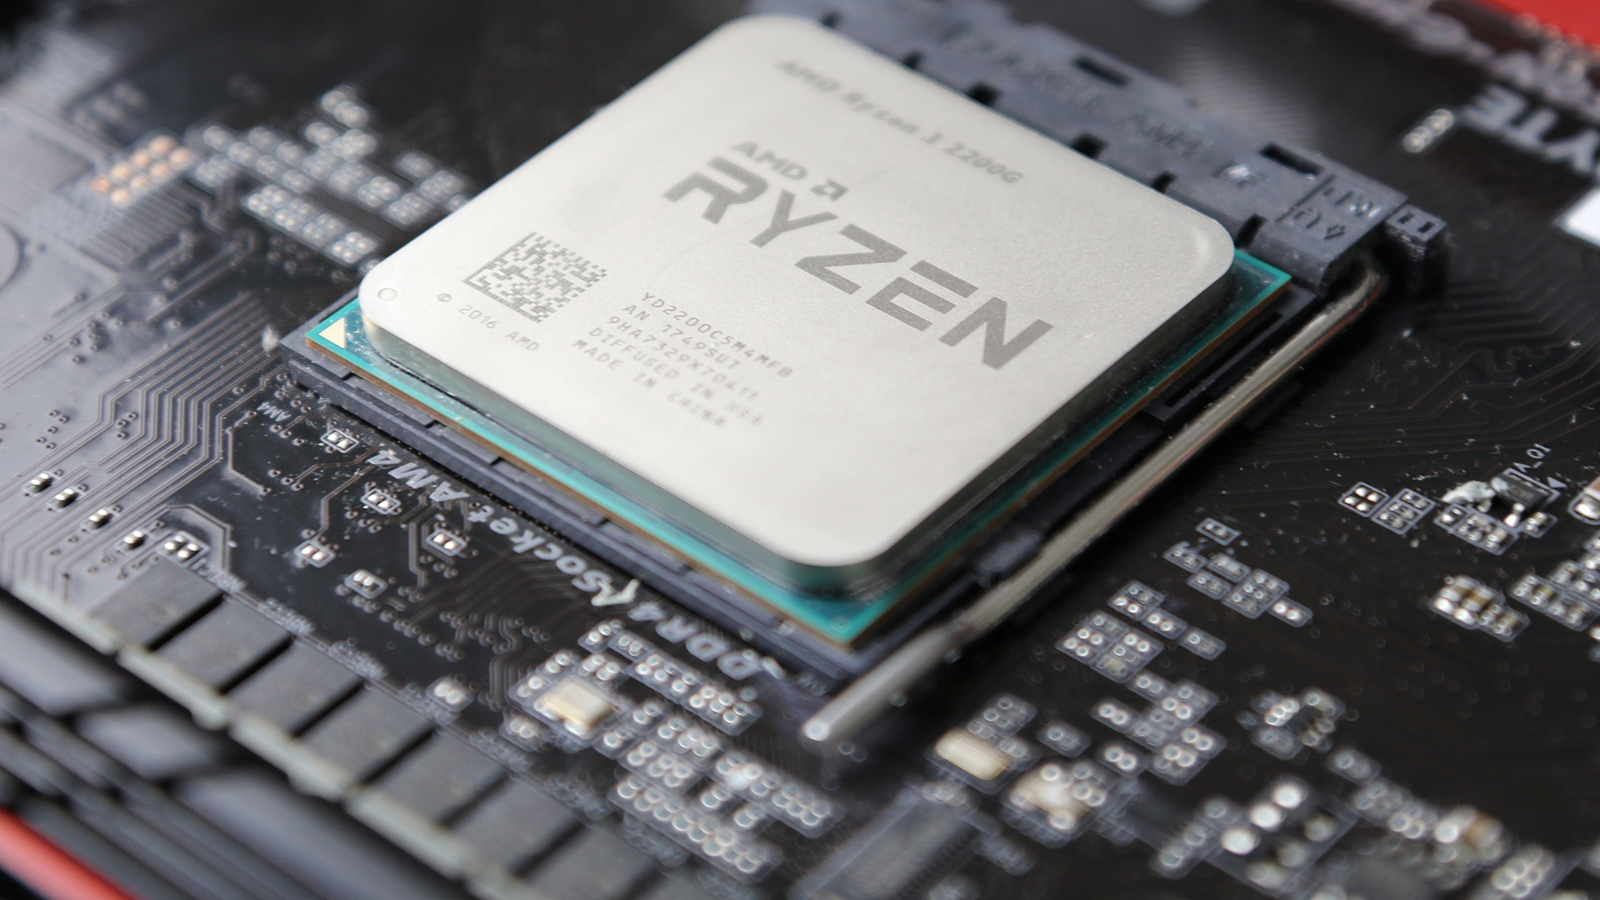 Ryzen 3 2200G/ 5 2400G review: triple-A without a graphics card? | Eurogamer.net